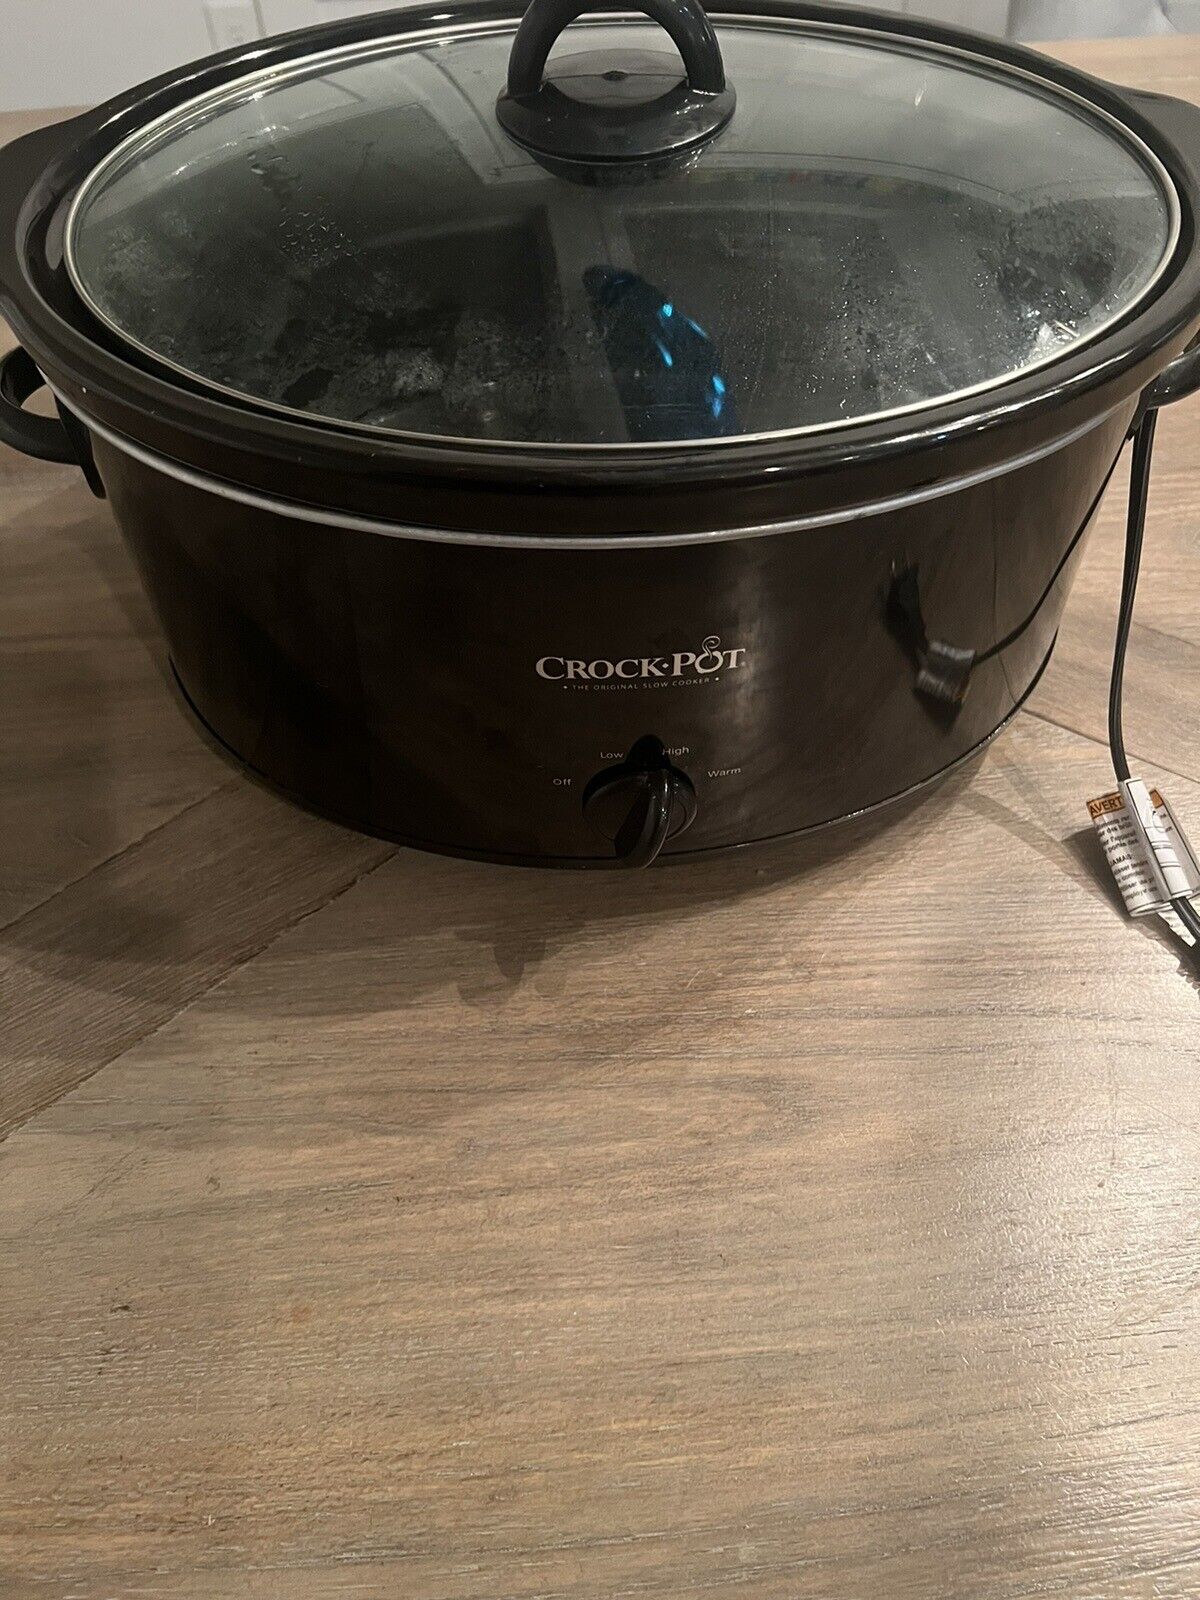 Crock-pot SCV800-B - 8-Quart Oval Manual Slow Cooker - Black